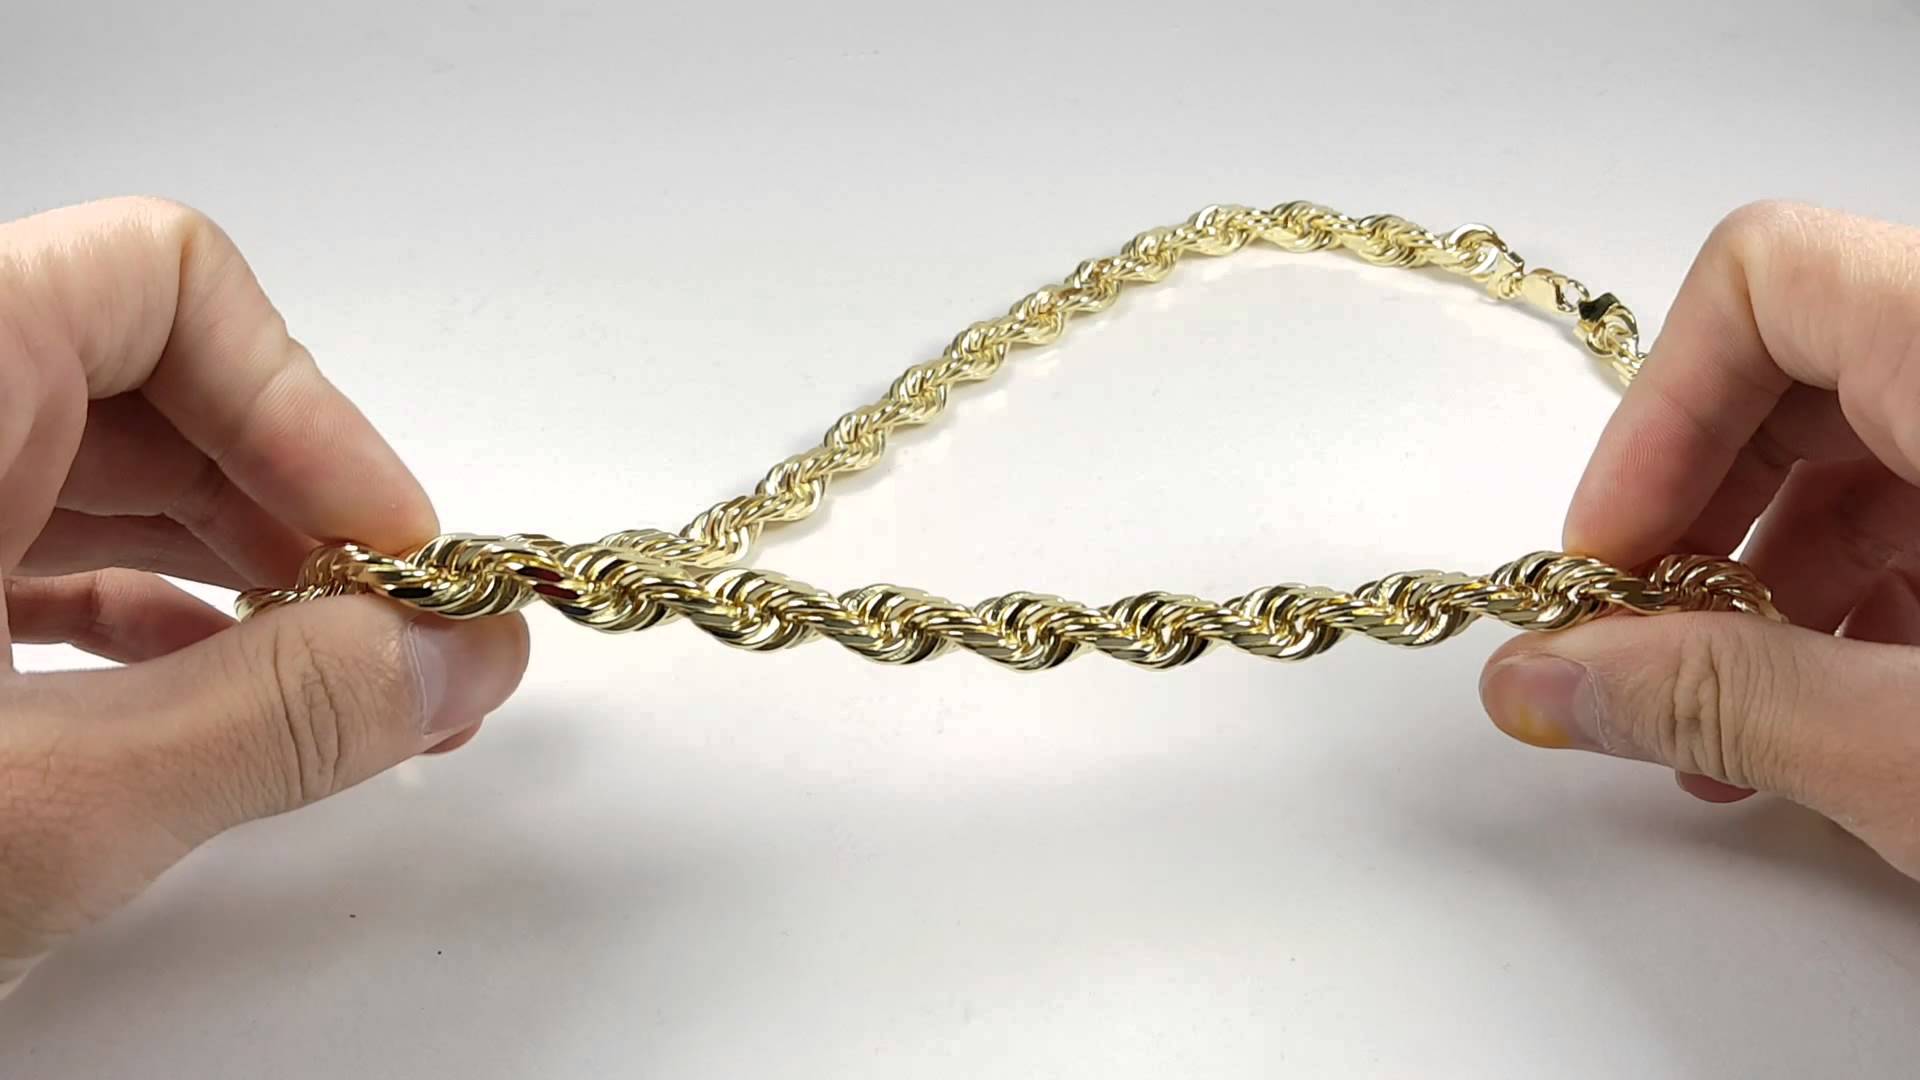 12mm diamond cut rope chain - YouTube